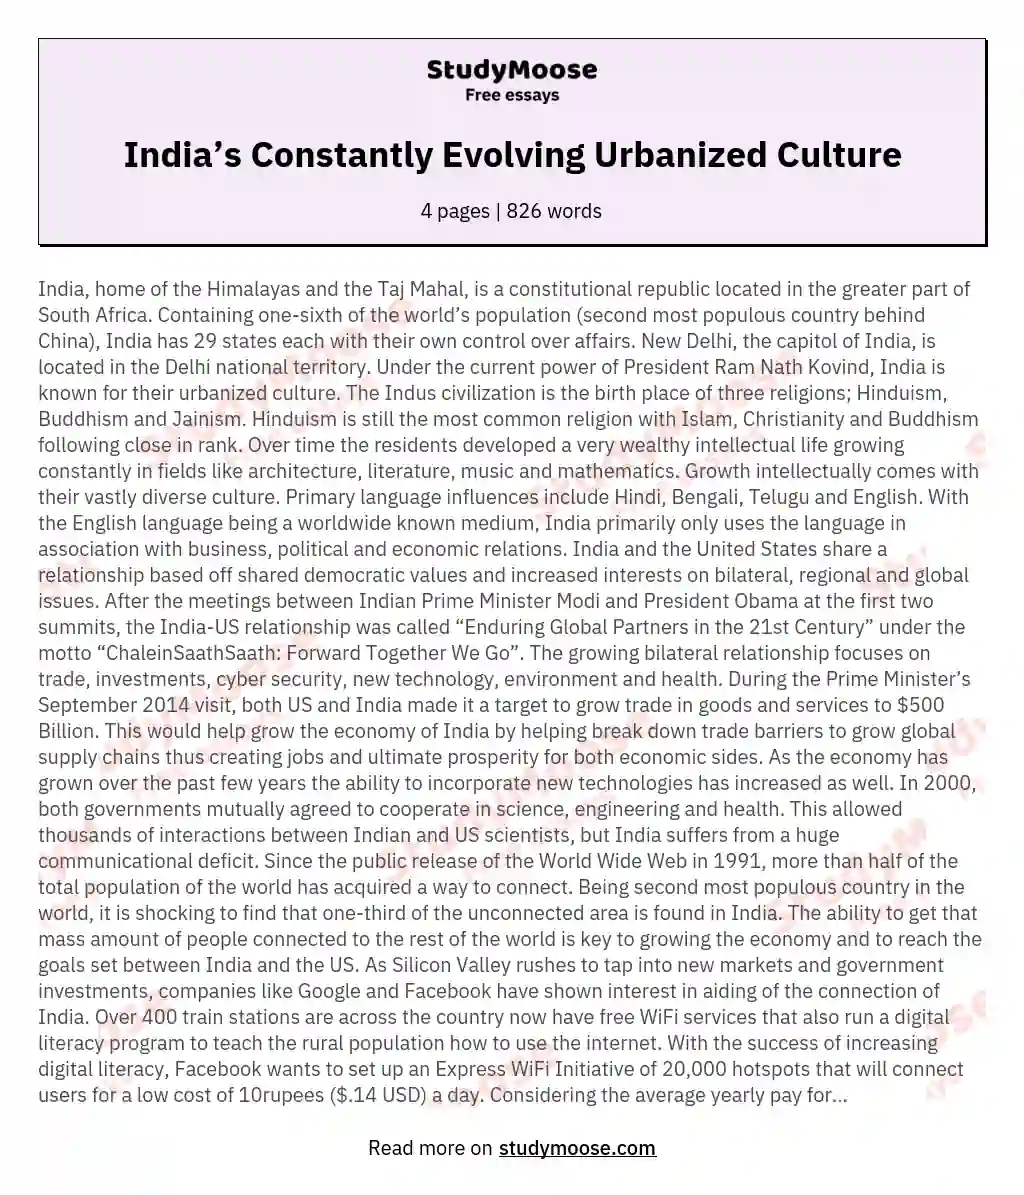 India’s Constantly Evolving Urbanized Culture essay